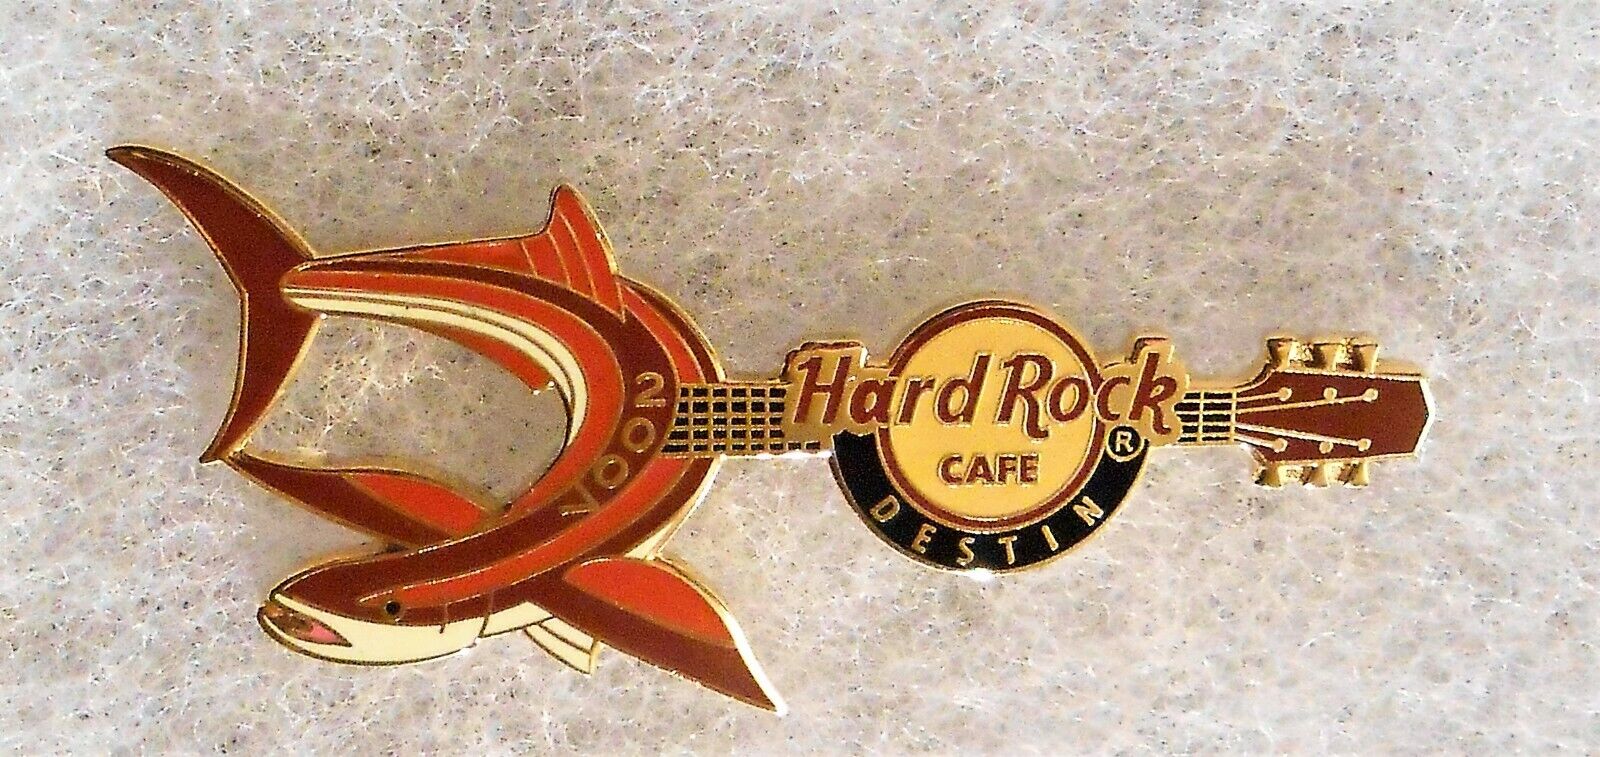 HARD ROCK CAFE DESTIN FISHING RODEO MULTI COLORED BROWN FISH GUITAR PIN # 39304